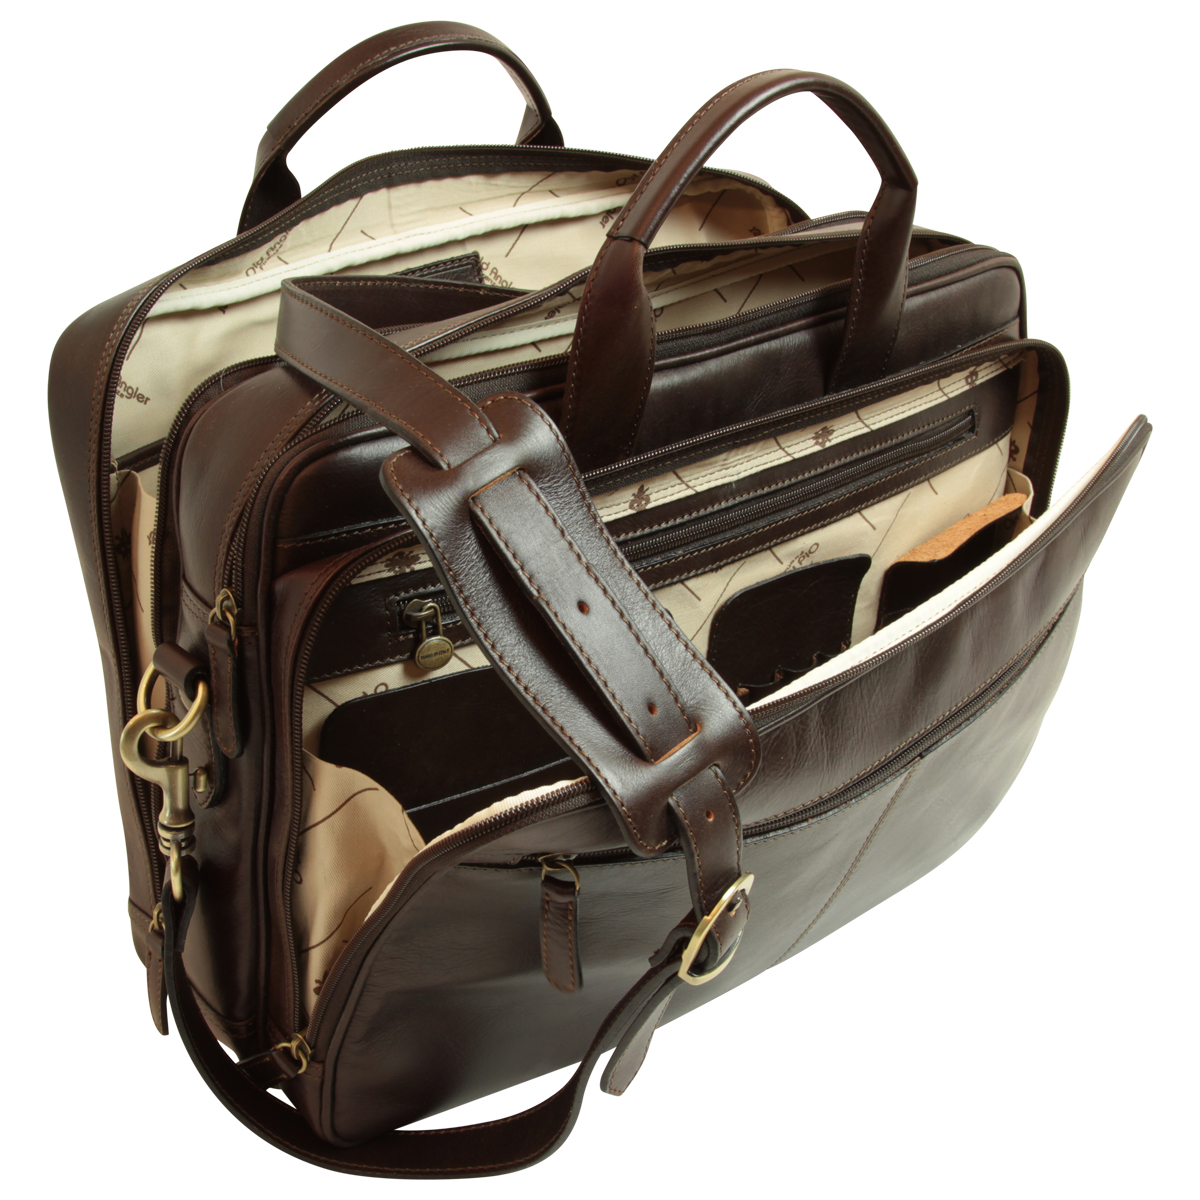 Italian Leather Briefcase - Dark Brown | 209589TM UK | Old Angler Firenze